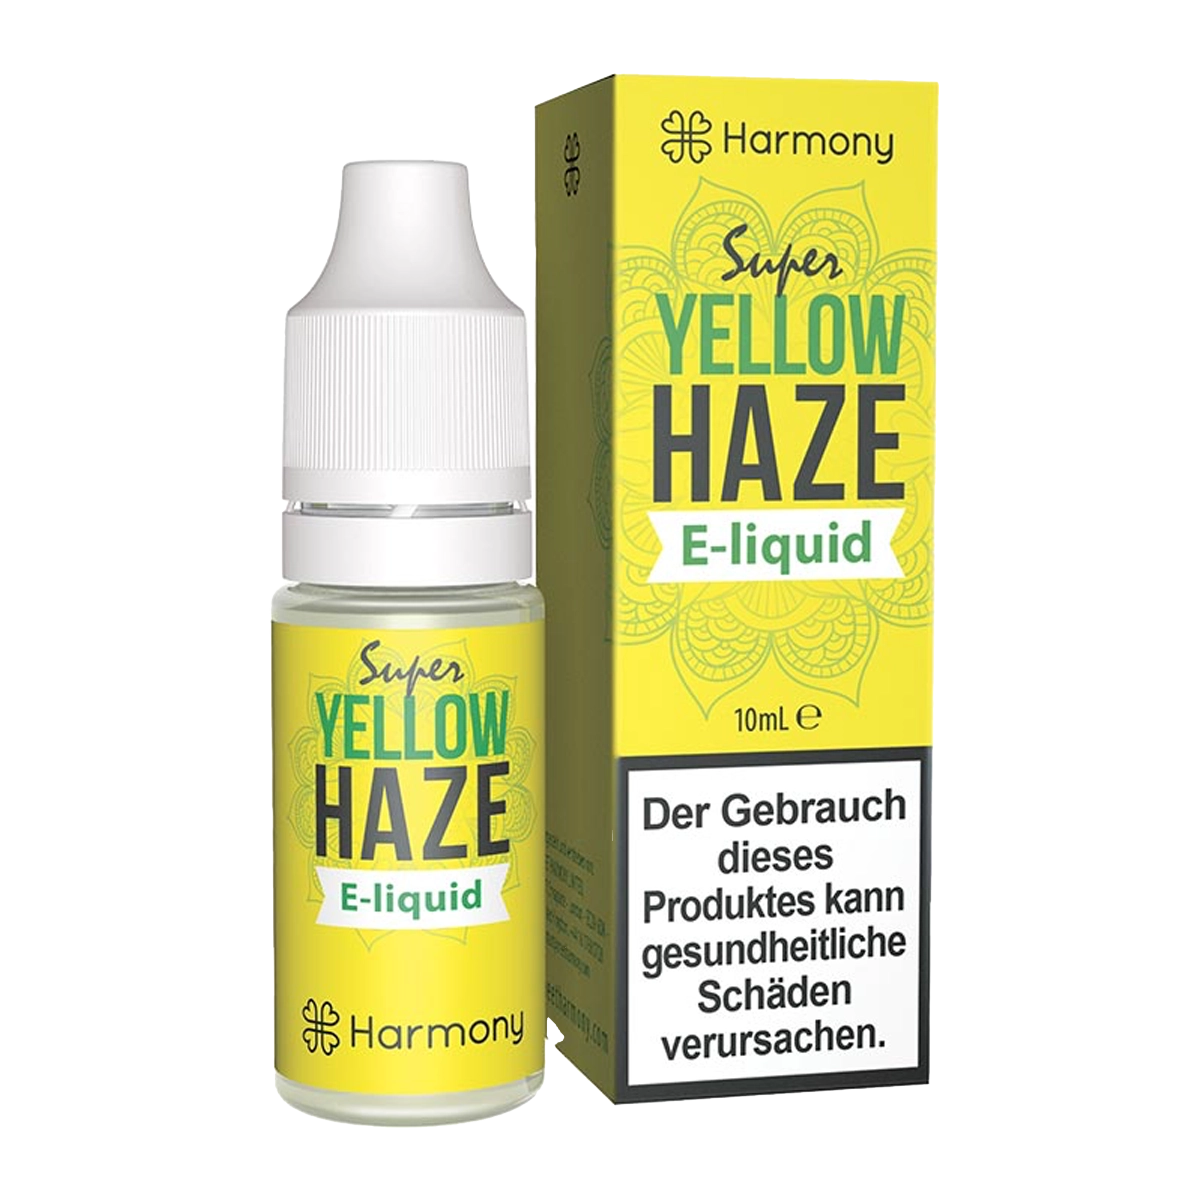 Harmony CBD E-Liquid (6%) - Super Yellow Haze